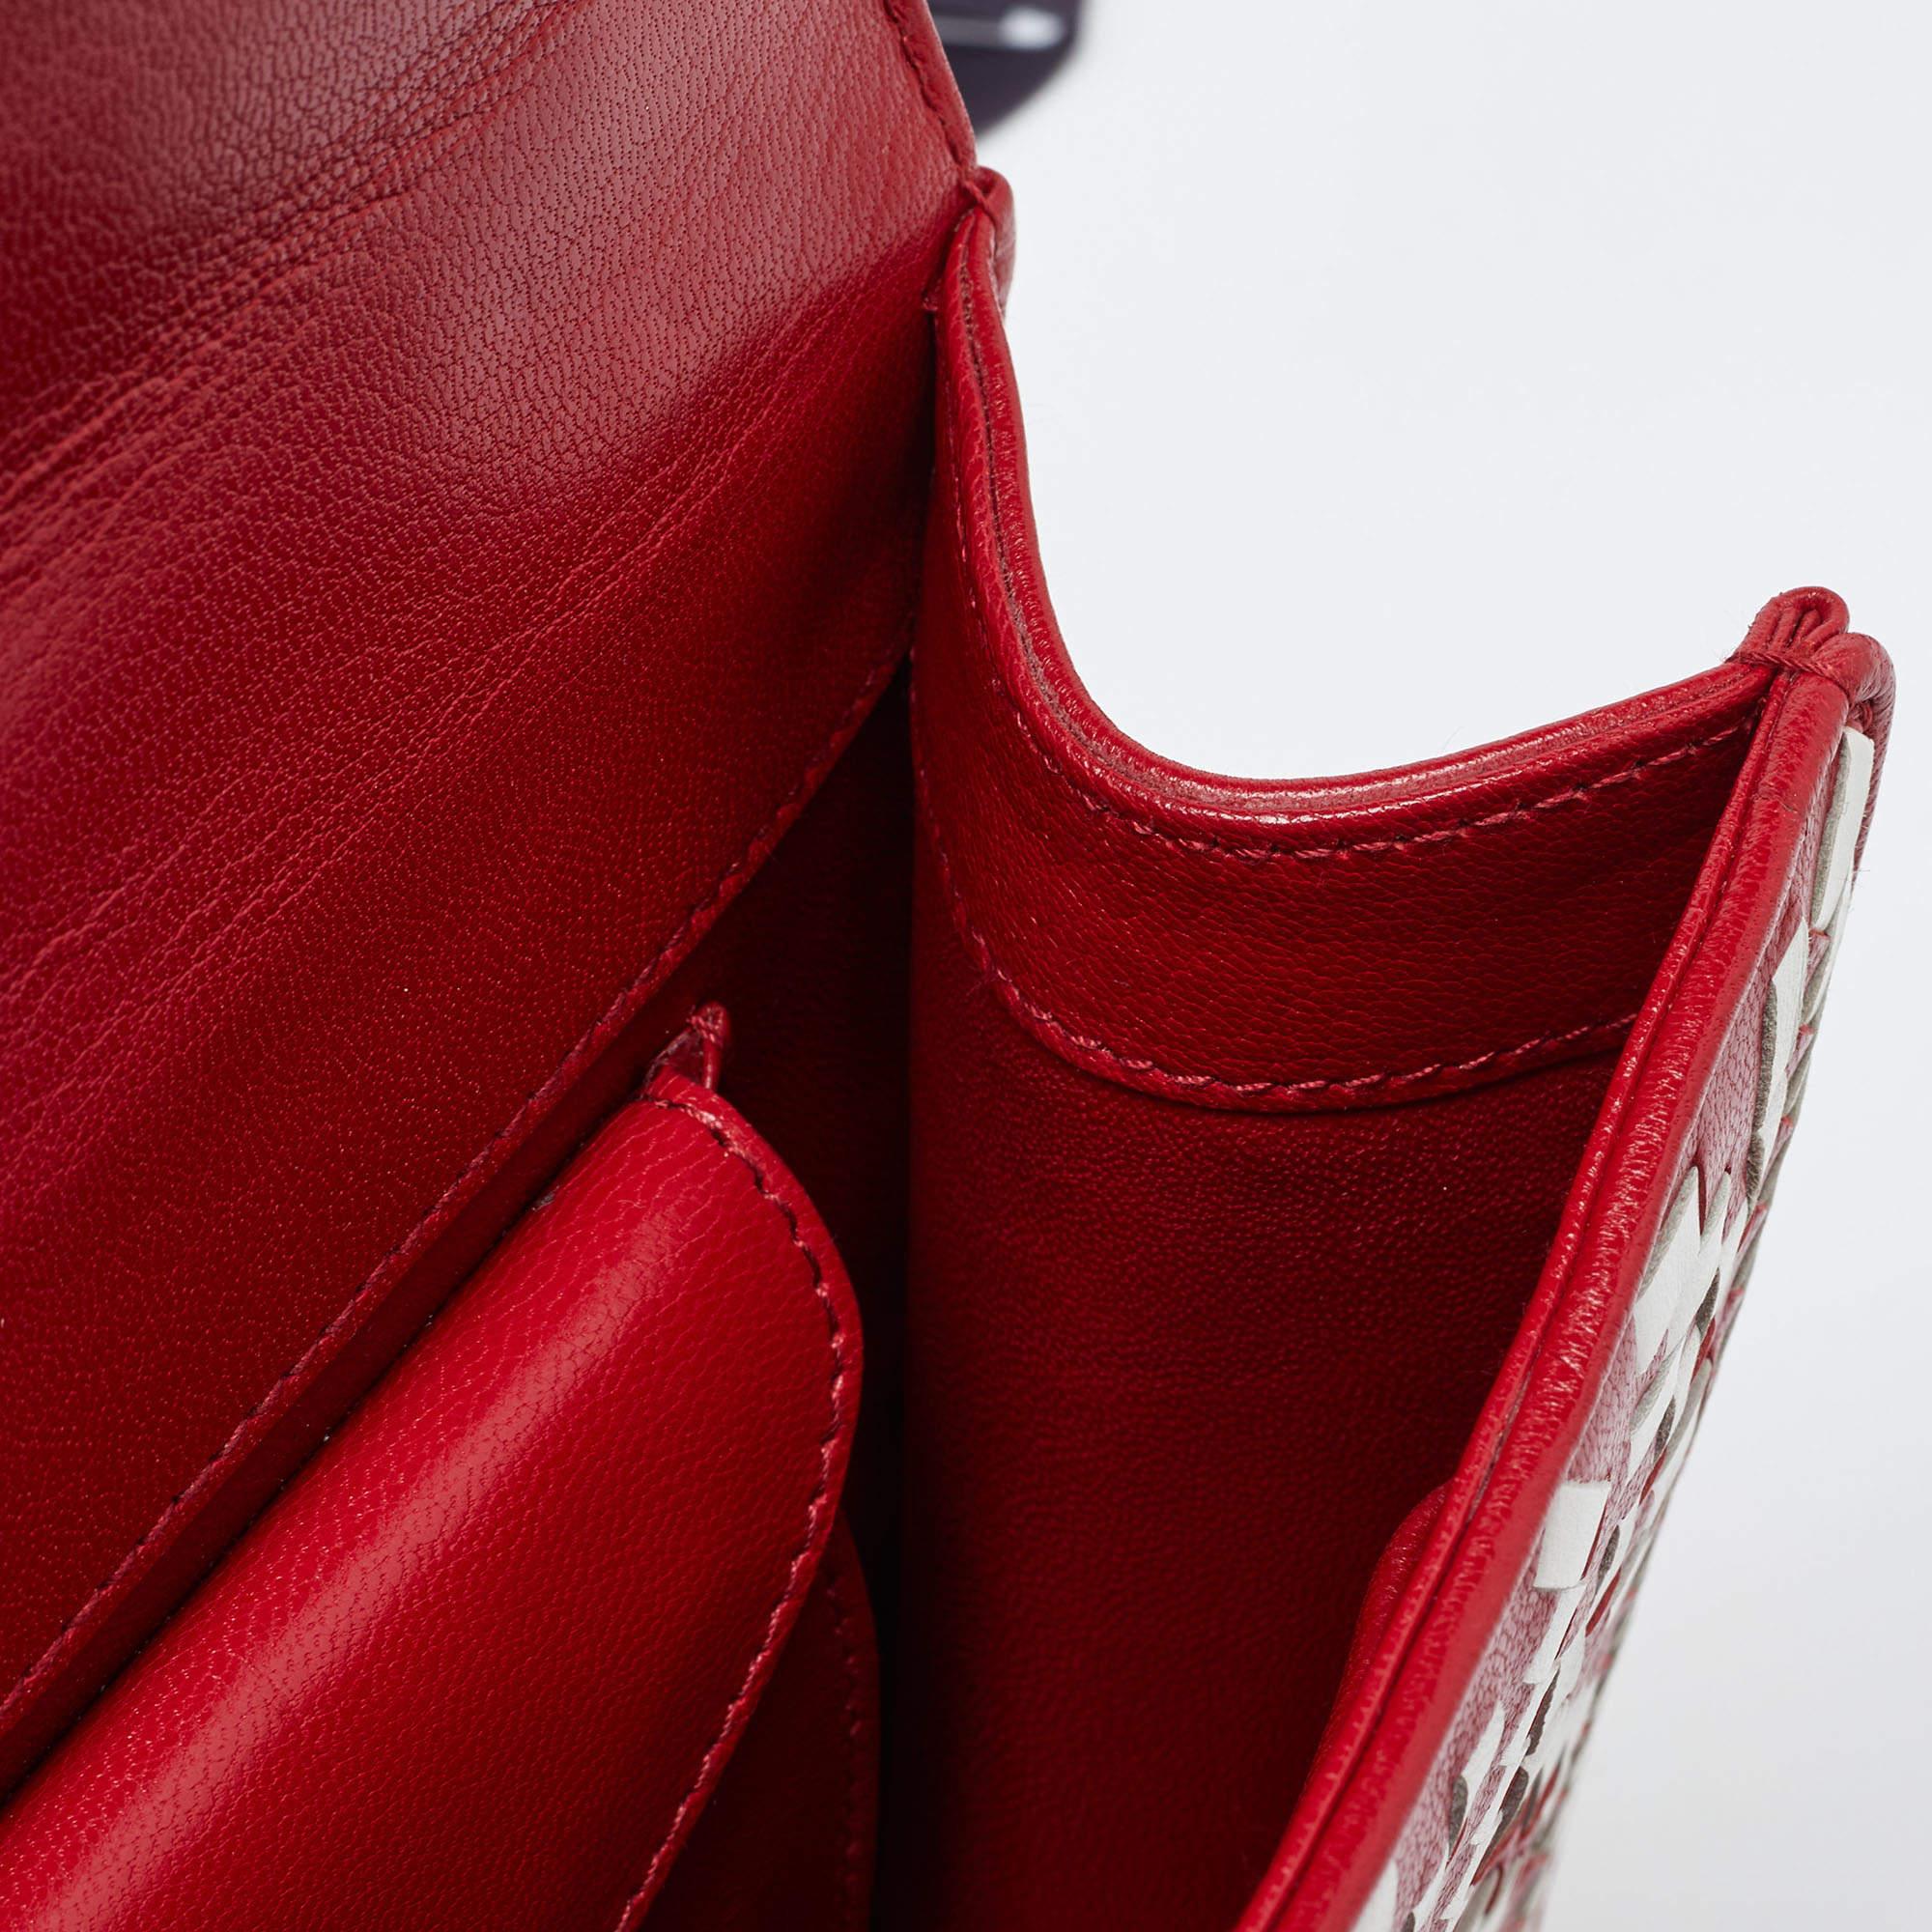 Prada Red/White Madras Woven Leather Pushlock Flap Bag In Good Condition For Sale In Dubai, Al Qouz 2